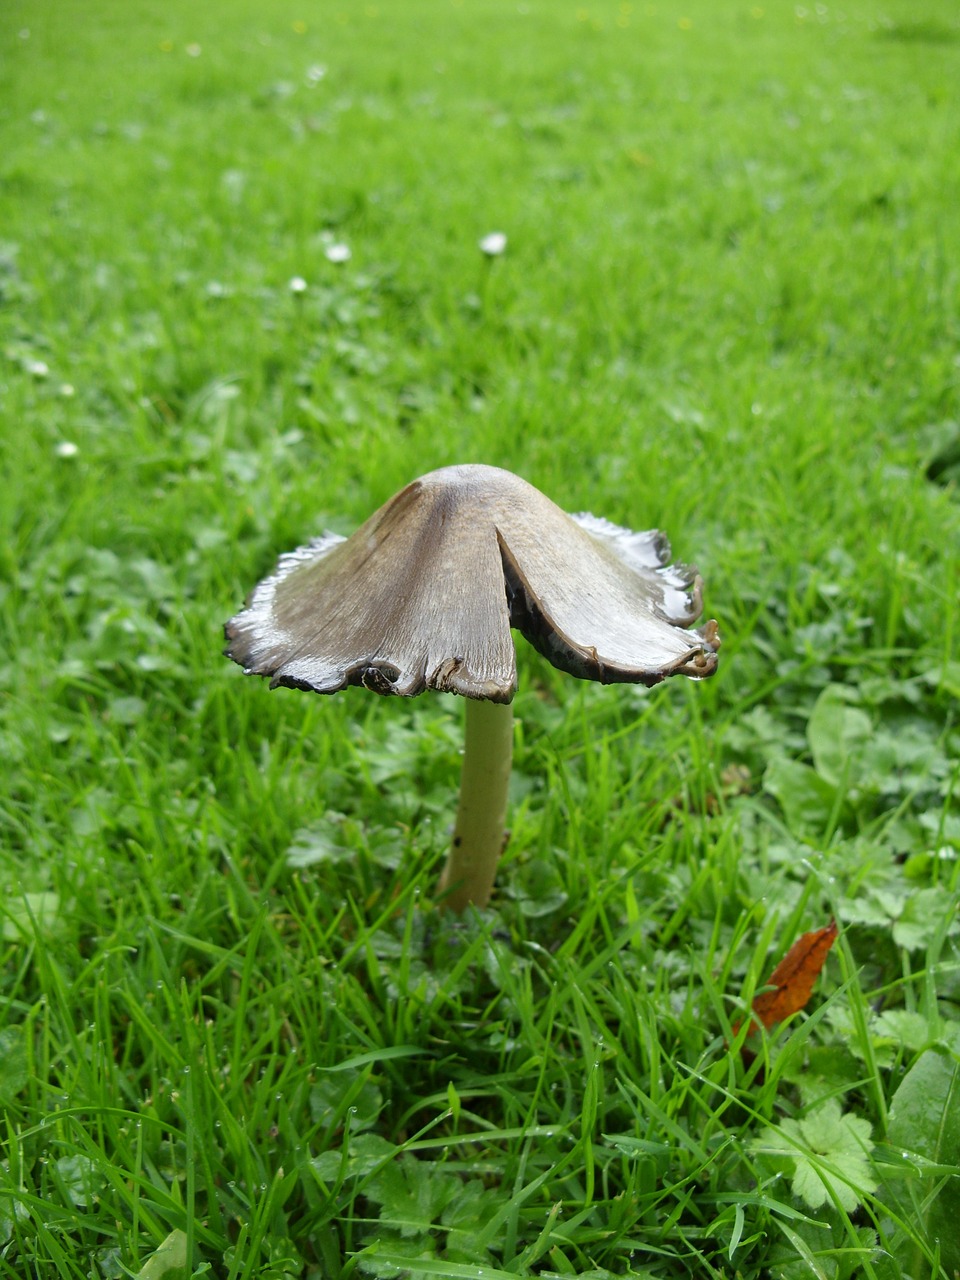 mushroom gift schöner free photo